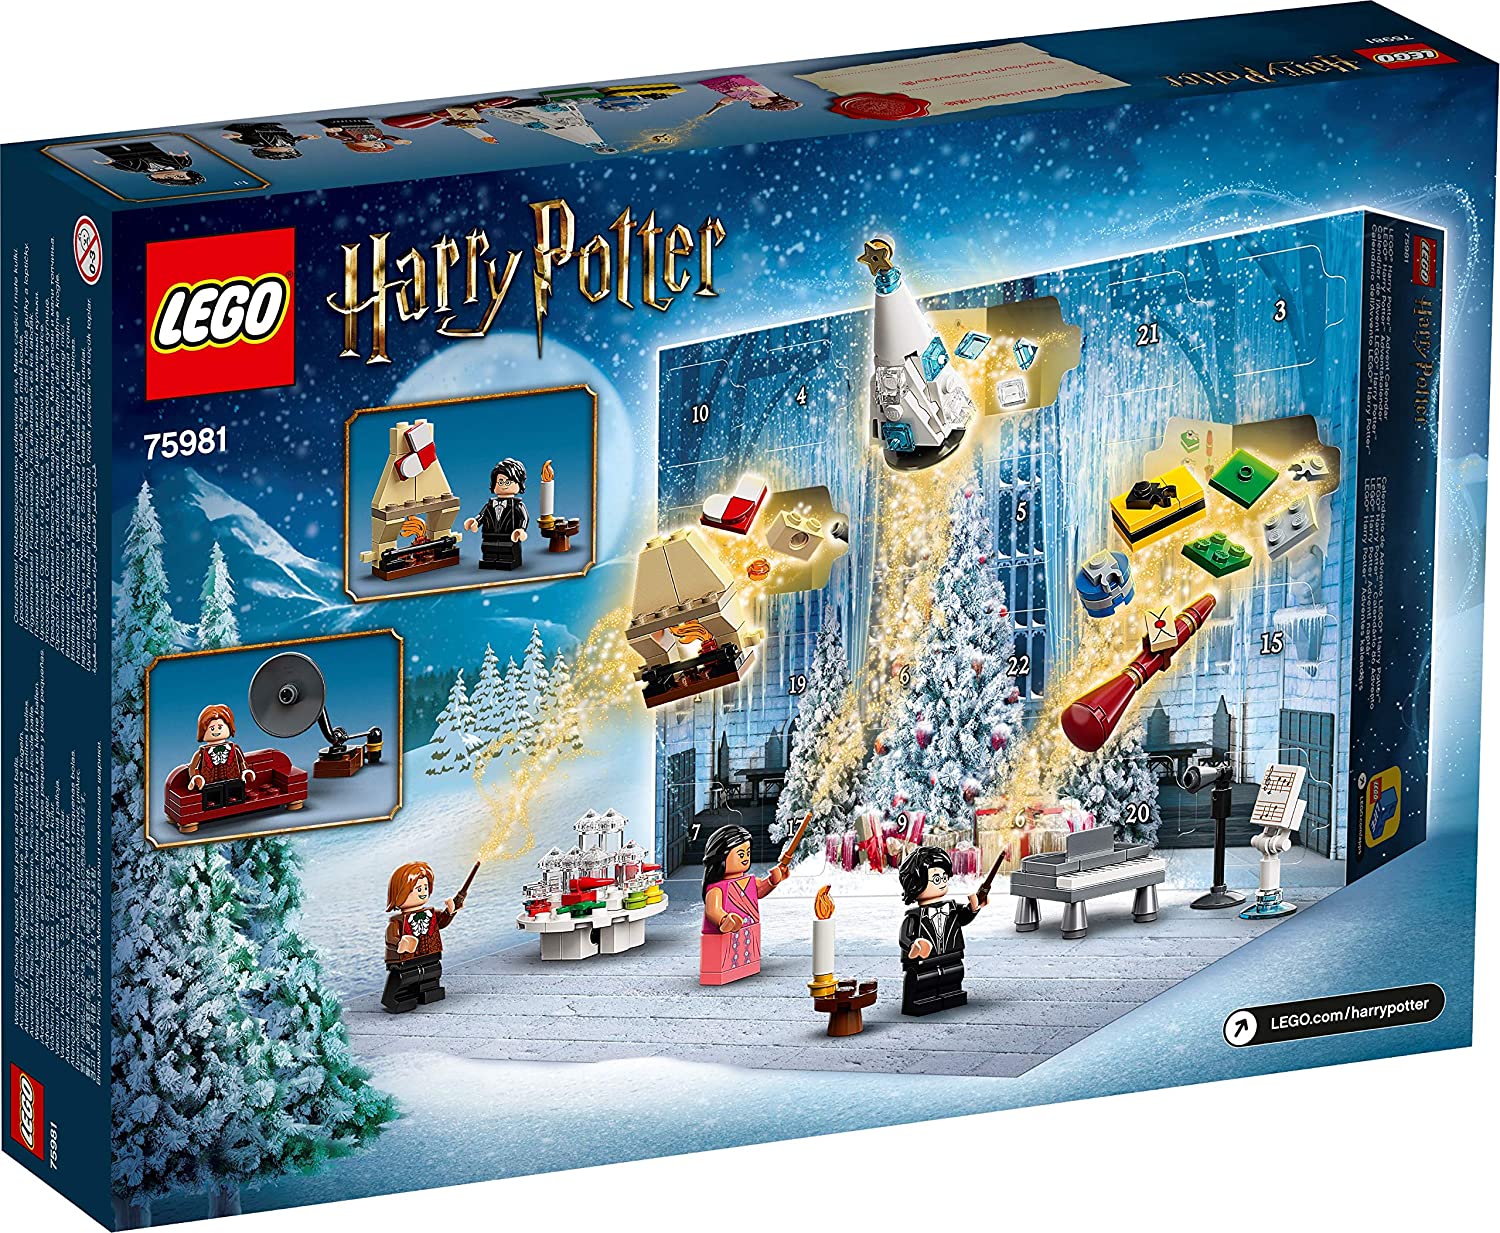 Lego Harry Potter calendario dell'avvento 2020